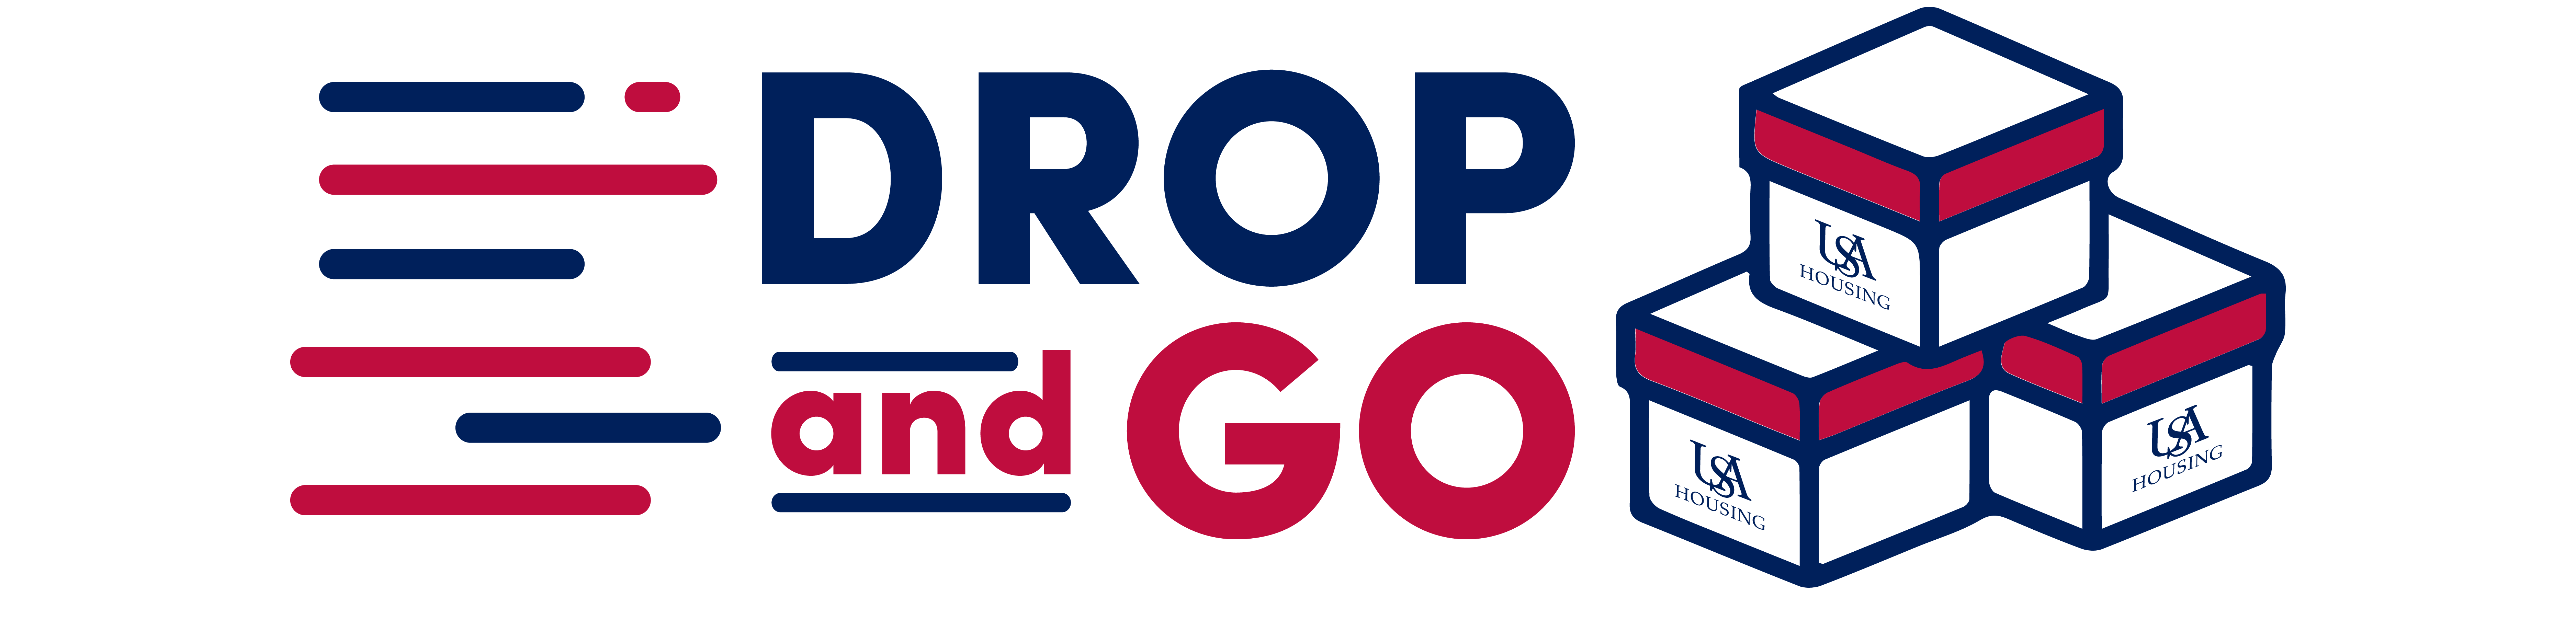 Drop Go Logo